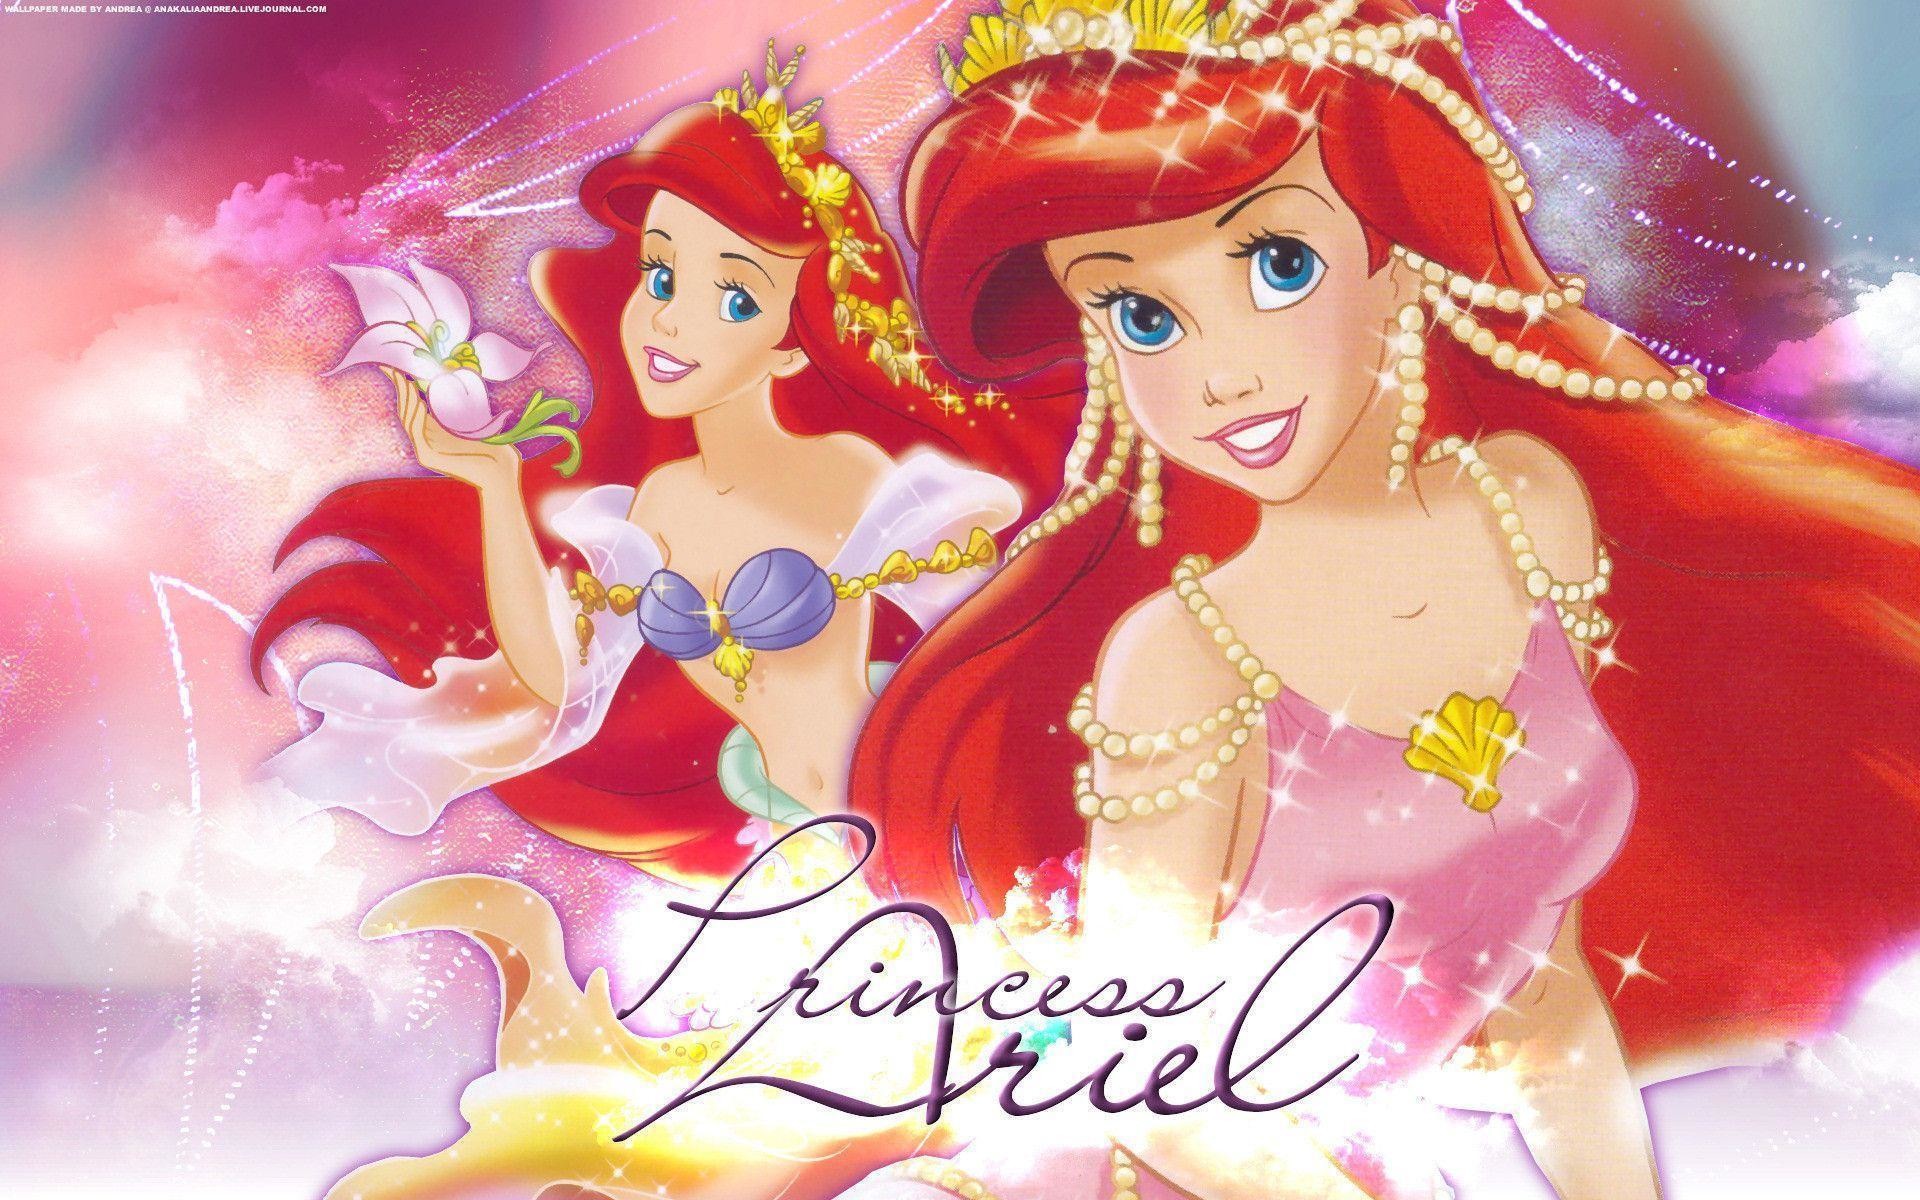 1920x1200 Princess Ariel - The Little Mermaid Wallpaper (4917924) - Fanpop